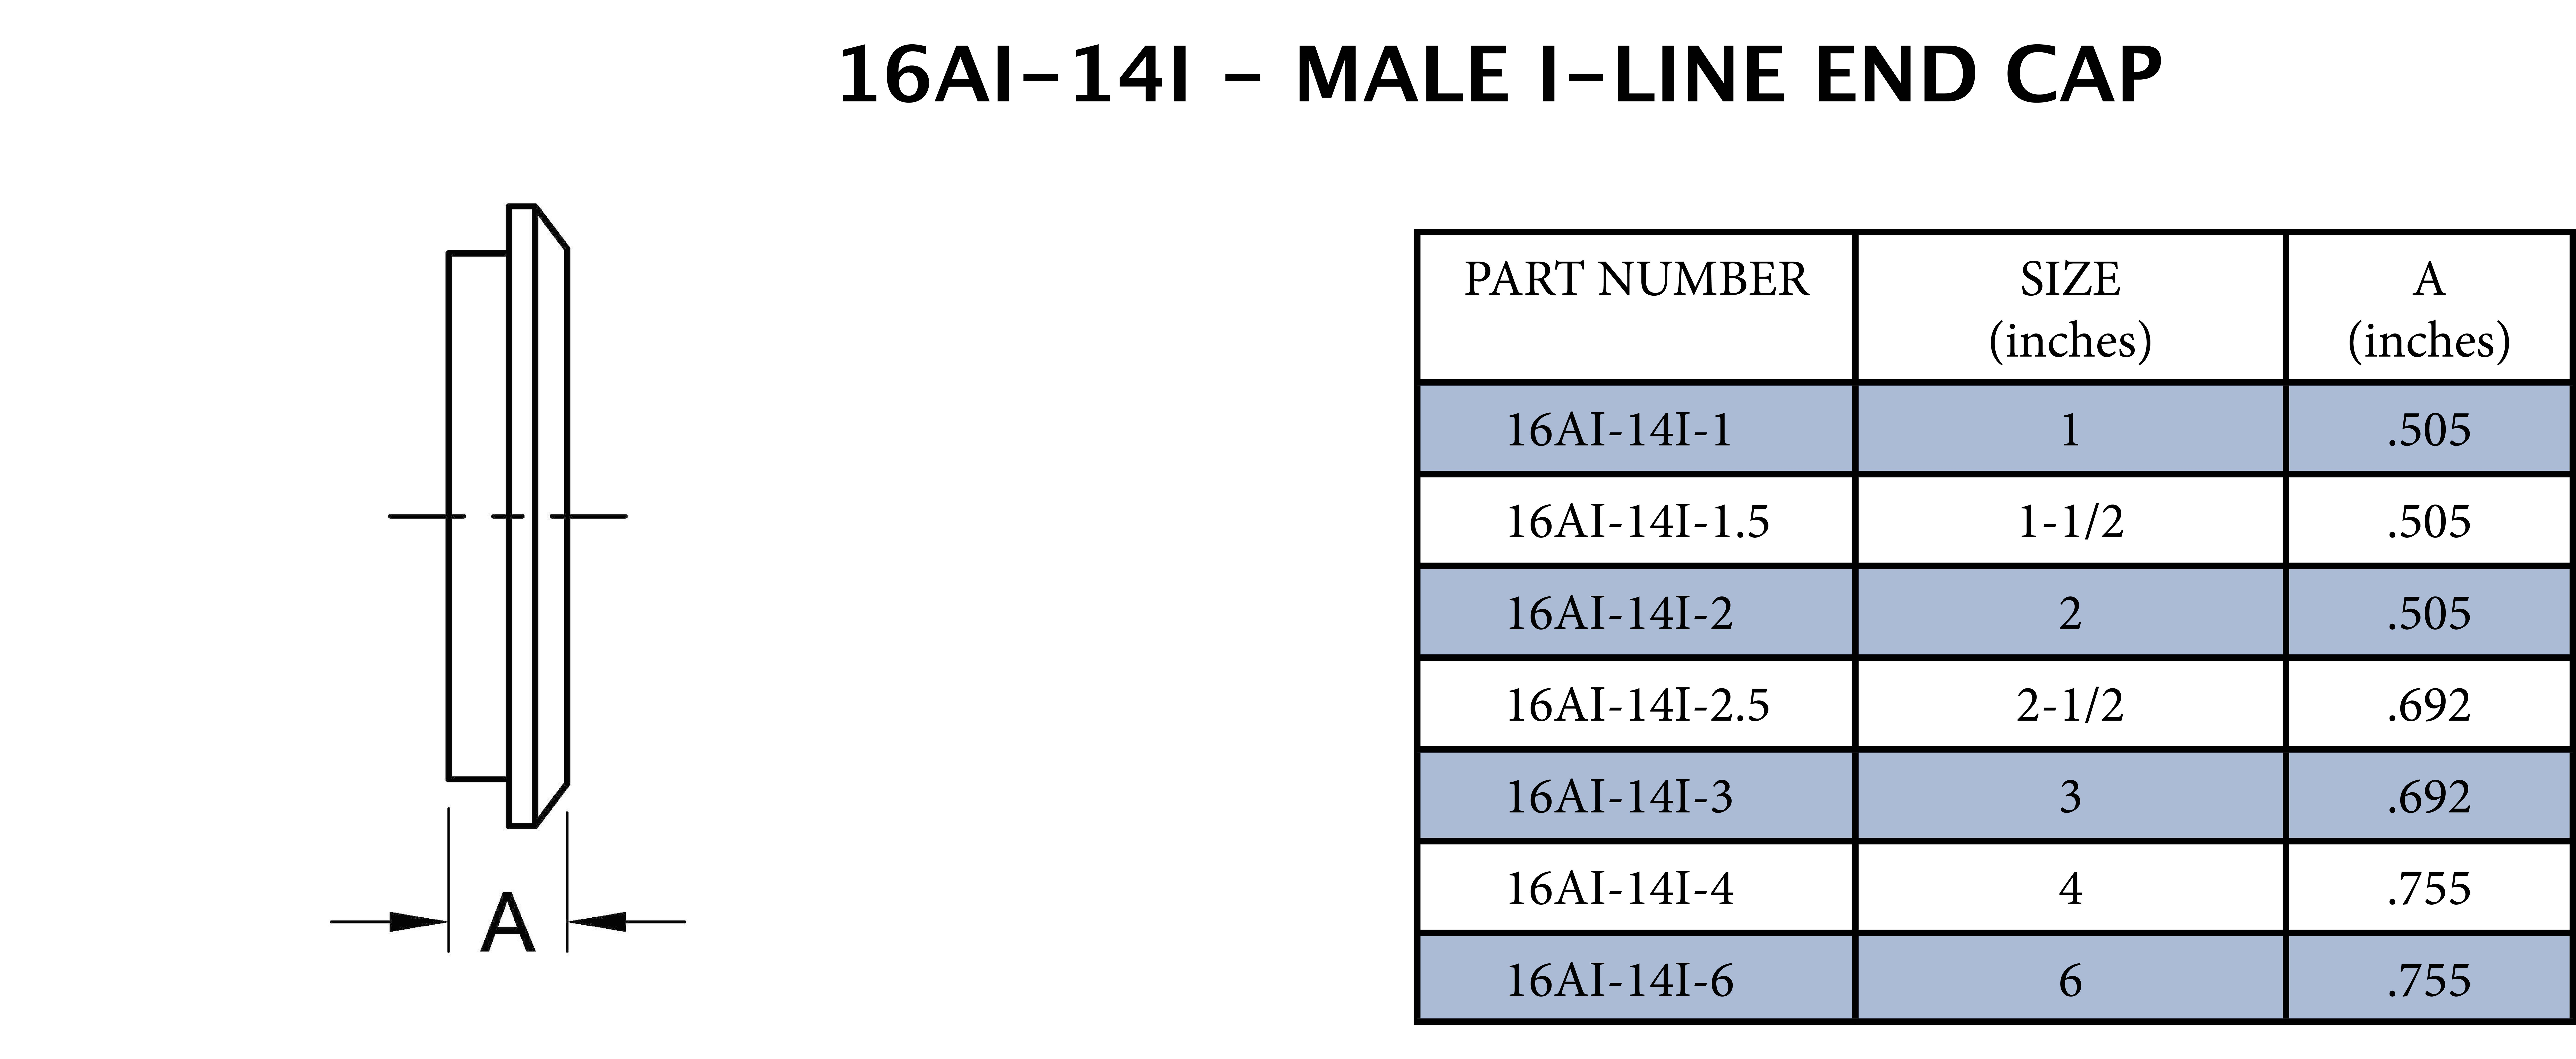 2-1/2 Male I-Line Solid Endcap - .692 Long 316SS